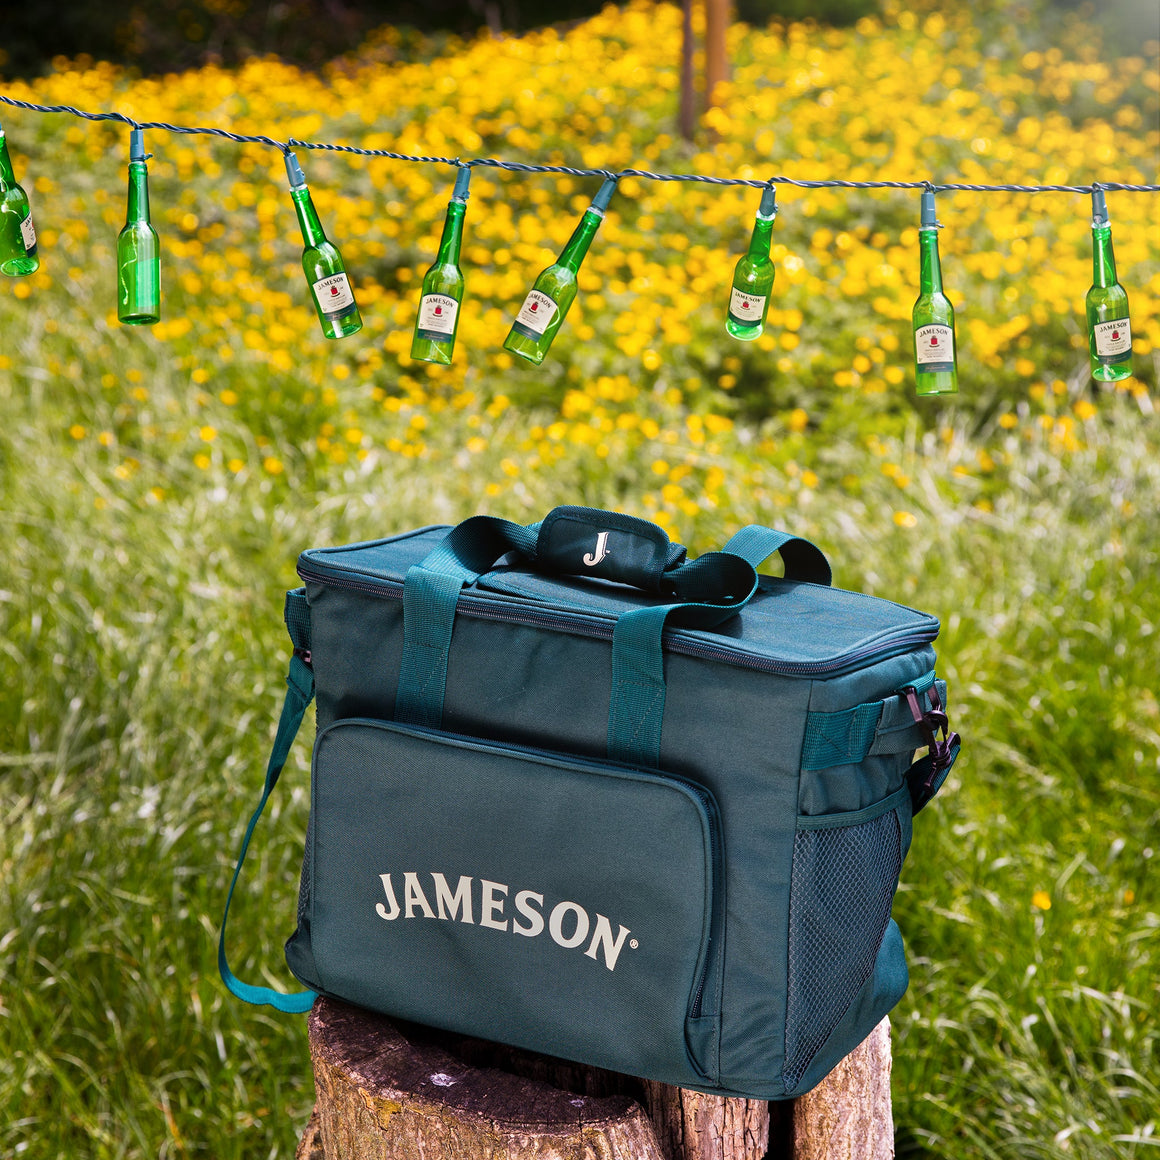 Jameson Green Cooler Bag